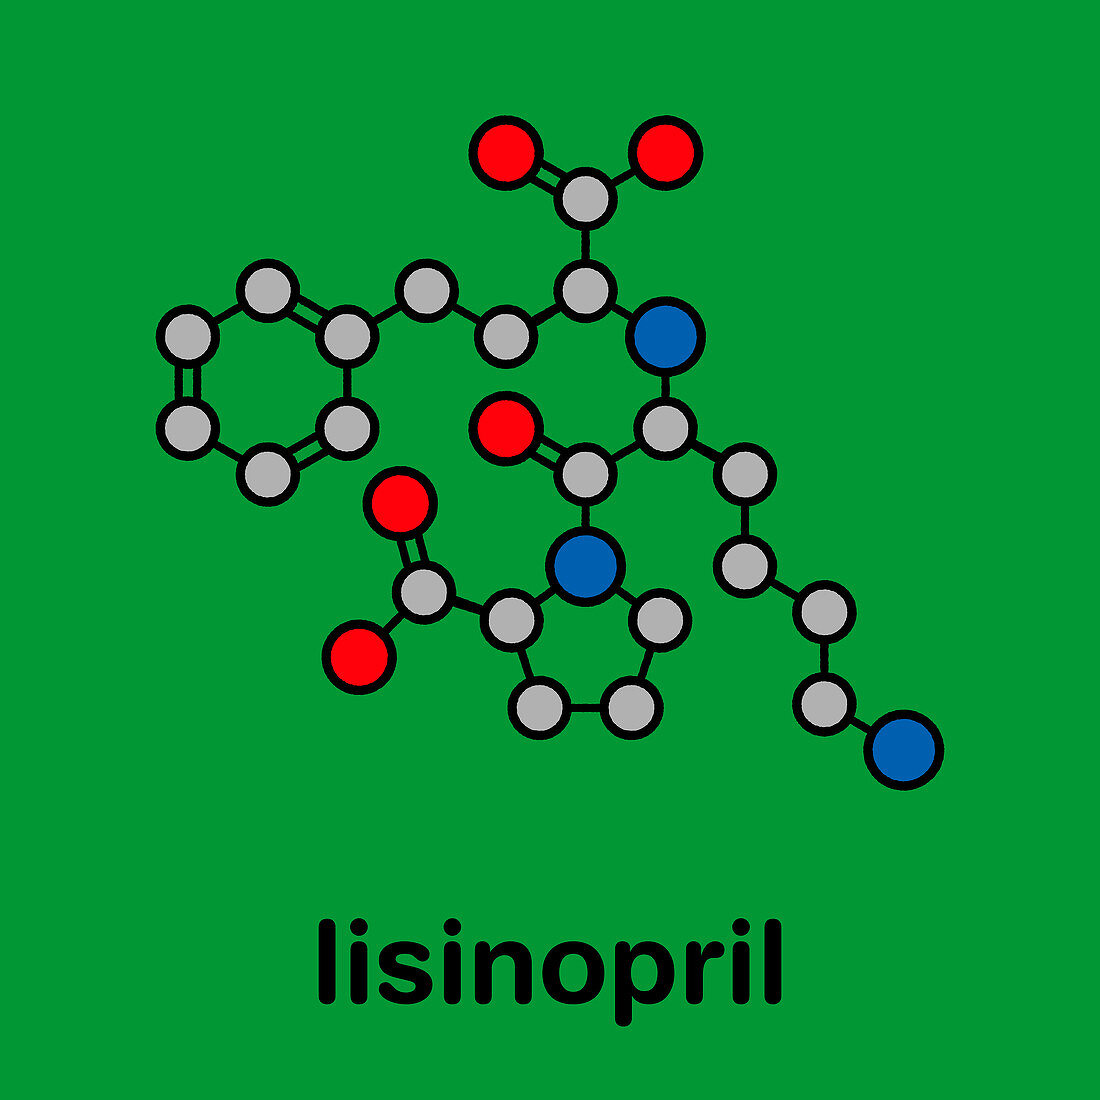 Lisinopril high blood pressure drug, molecular model